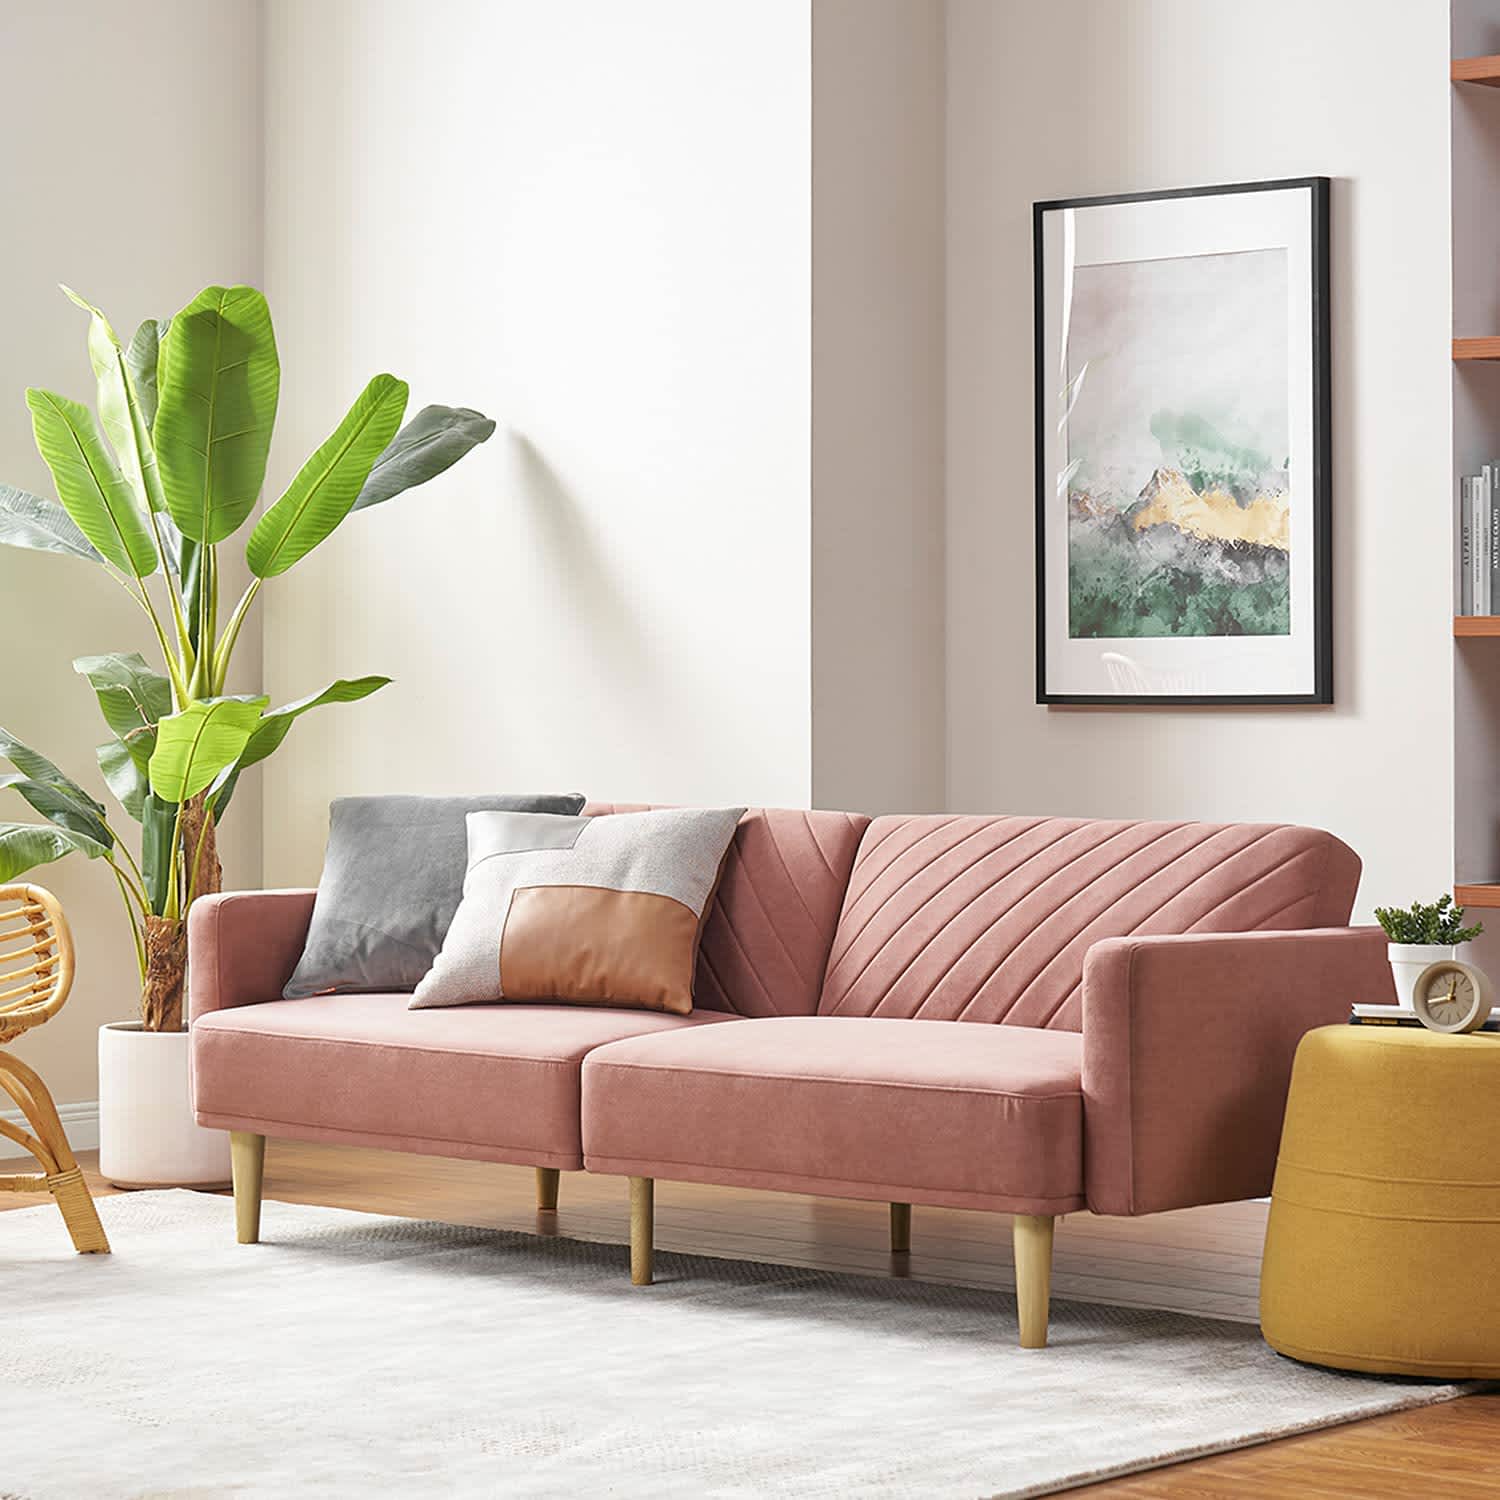 12 Best Couches Under $500, Per Home Interior Designers